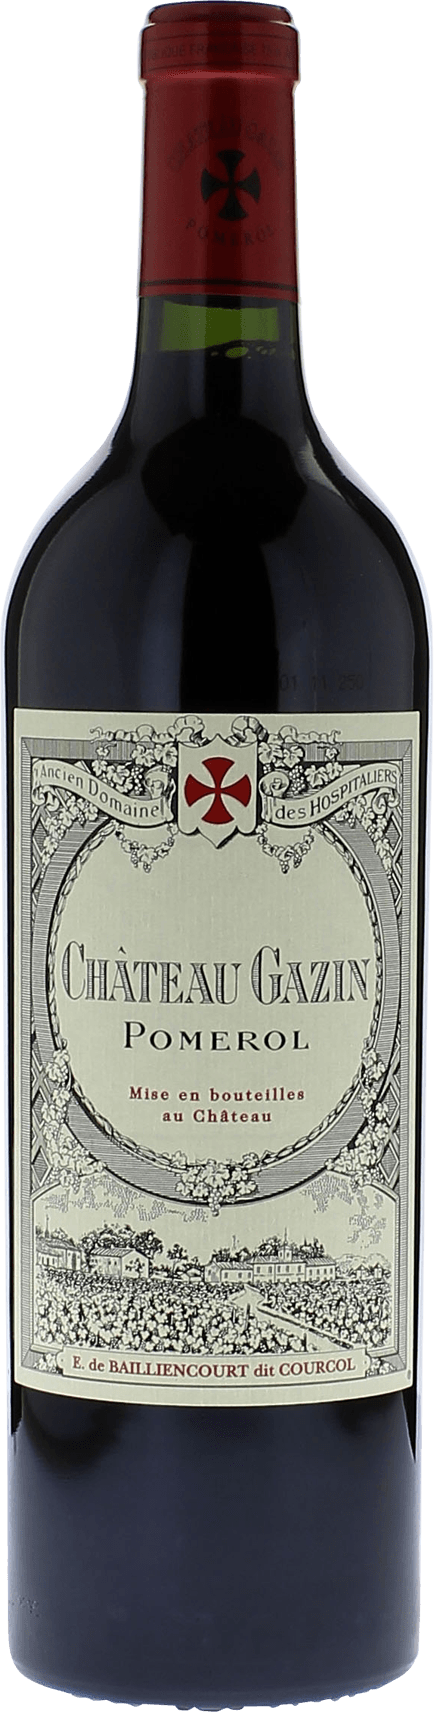 Gazin 2001  Pomerol, Bordeaux rouge